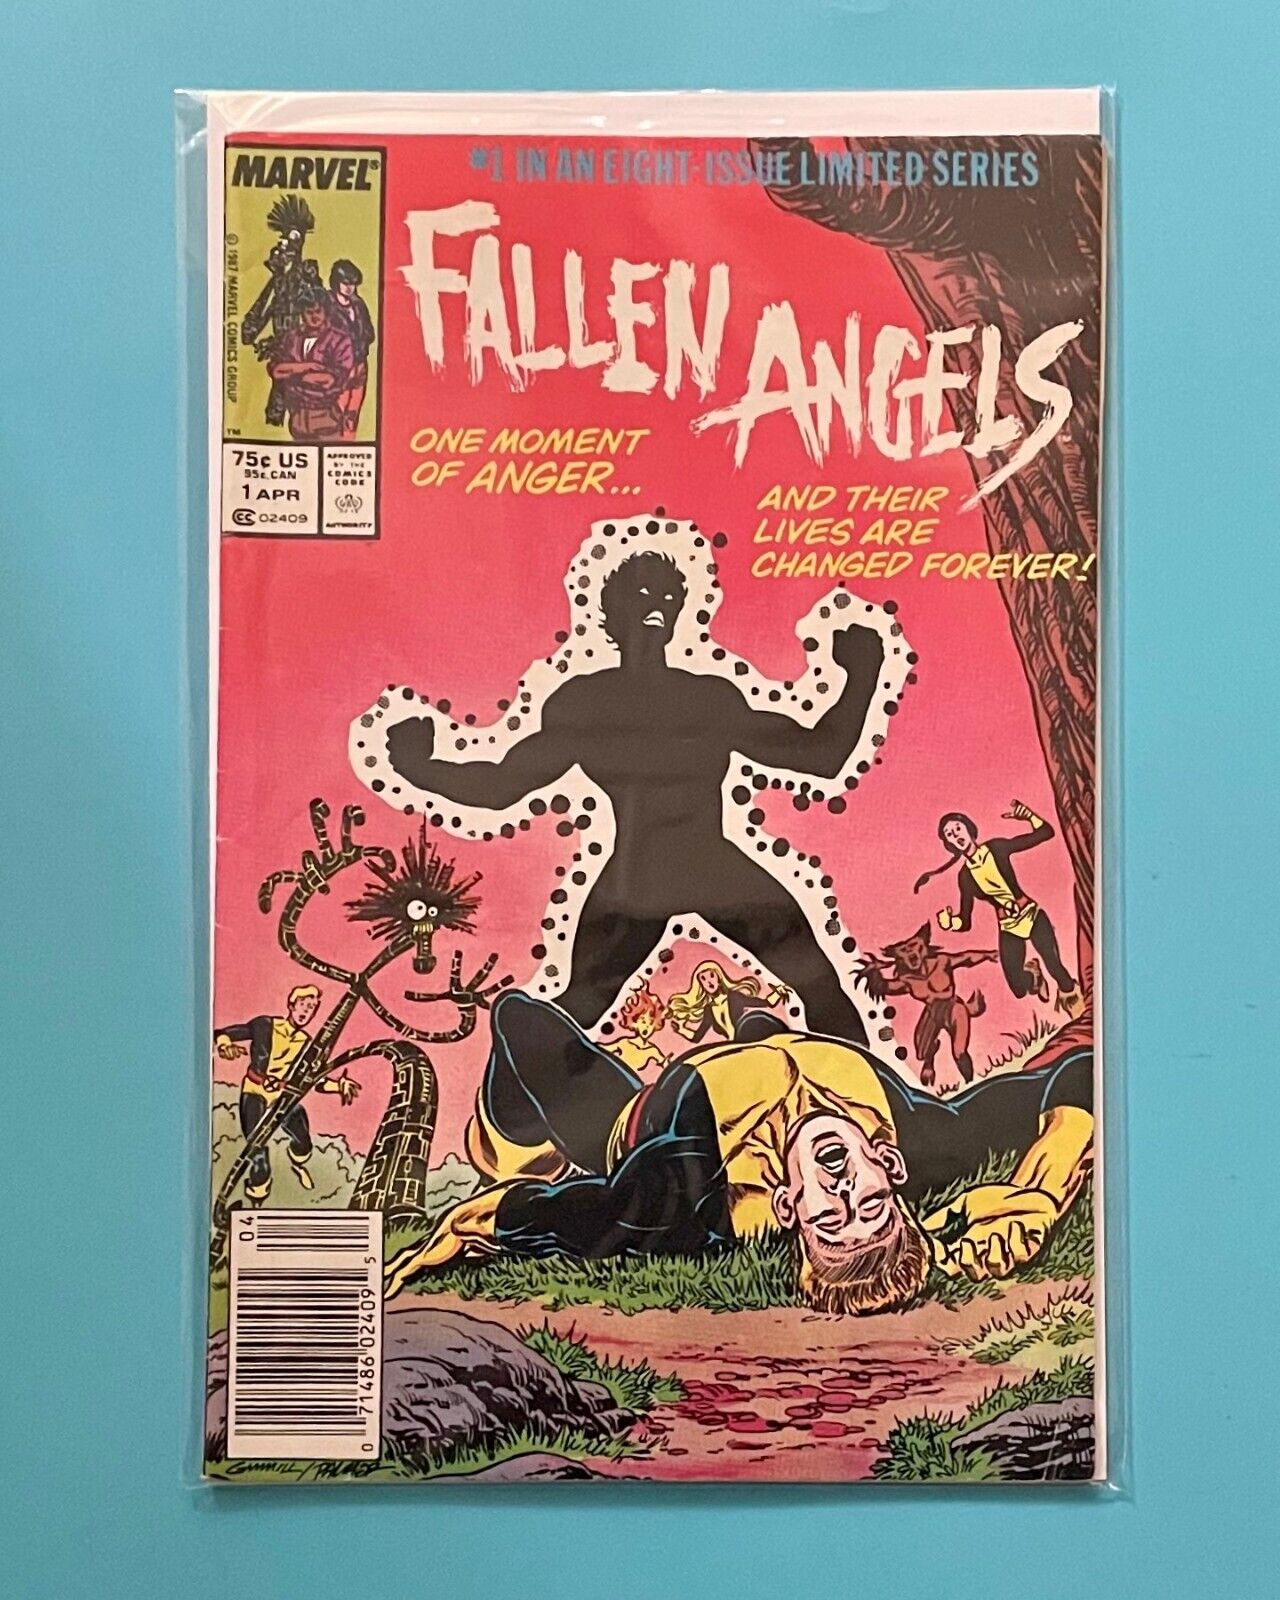 Fallen Angels #1 (Marvel, April 1987) - Copper Age